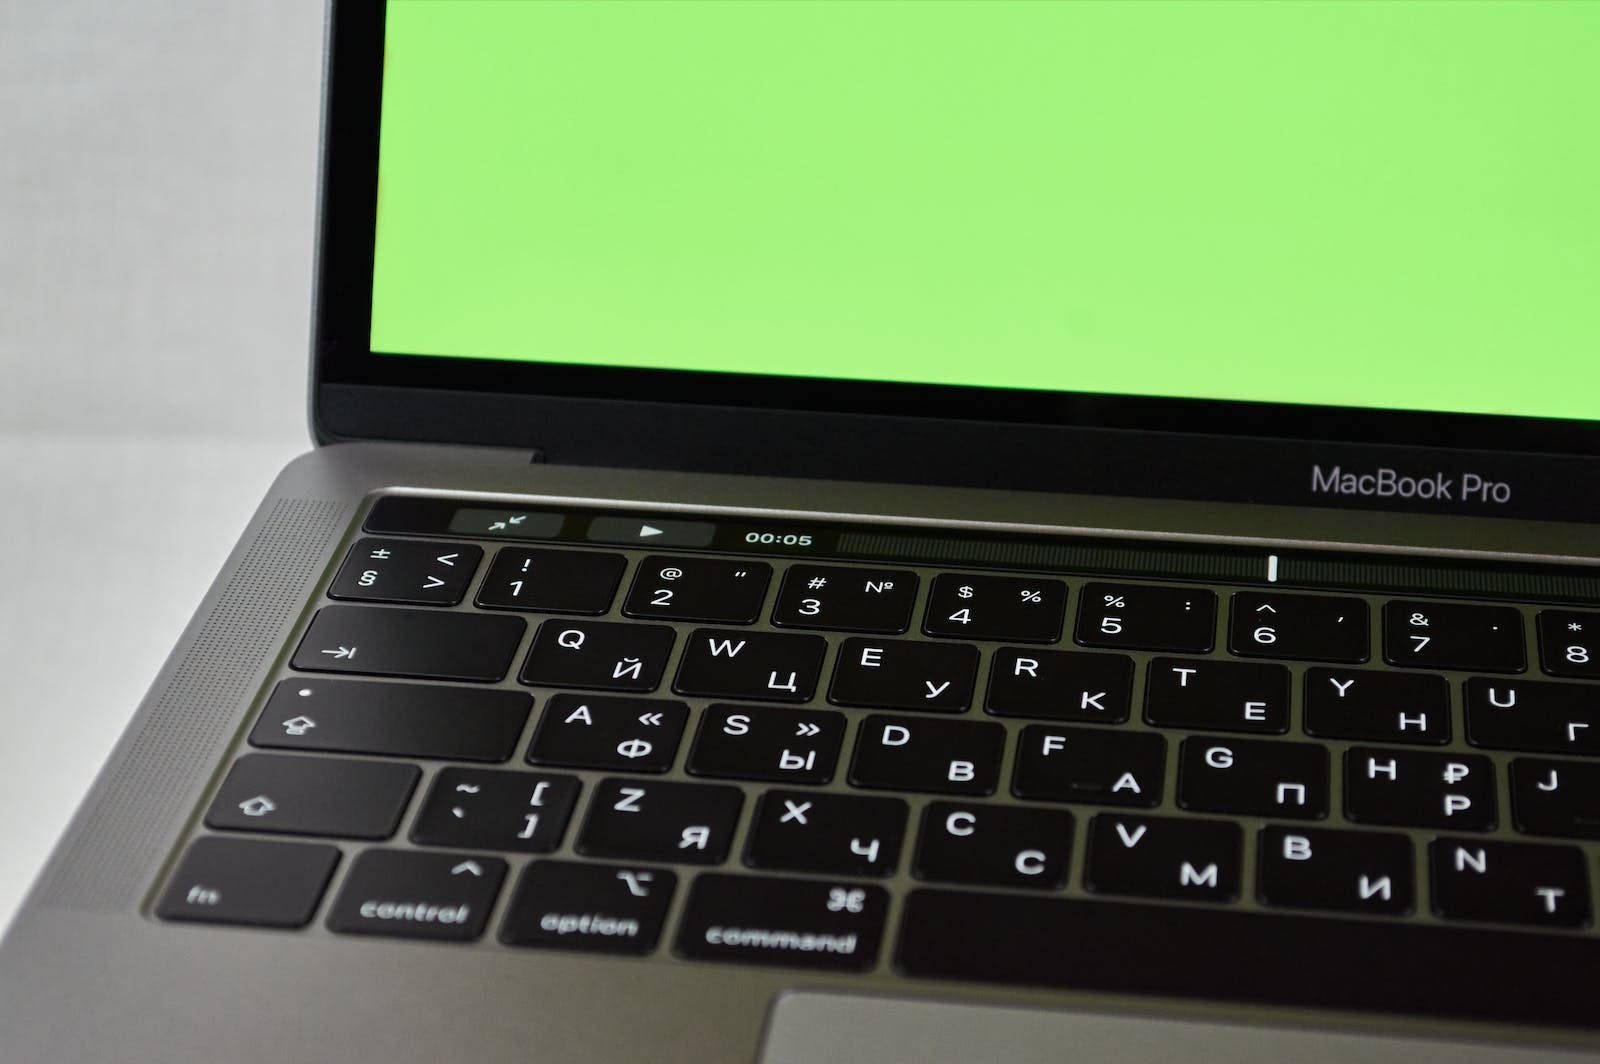 Macbook On A Green Screen Background